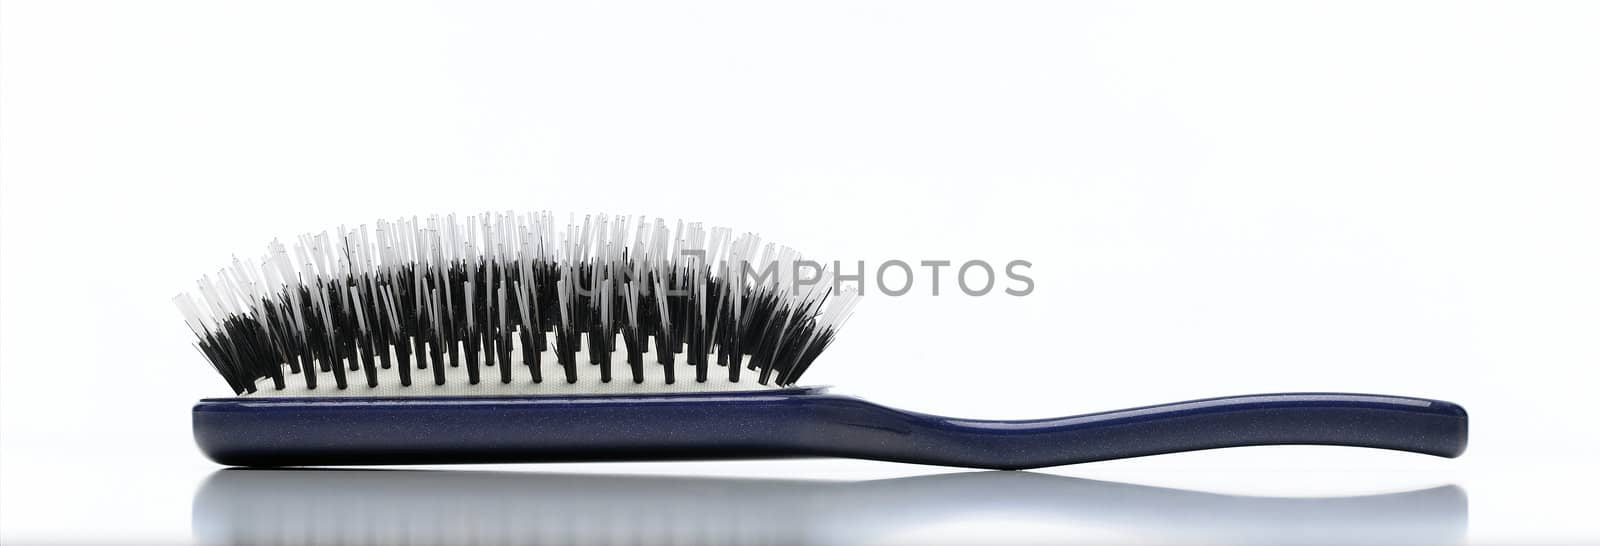 Hairbrush Professional on white